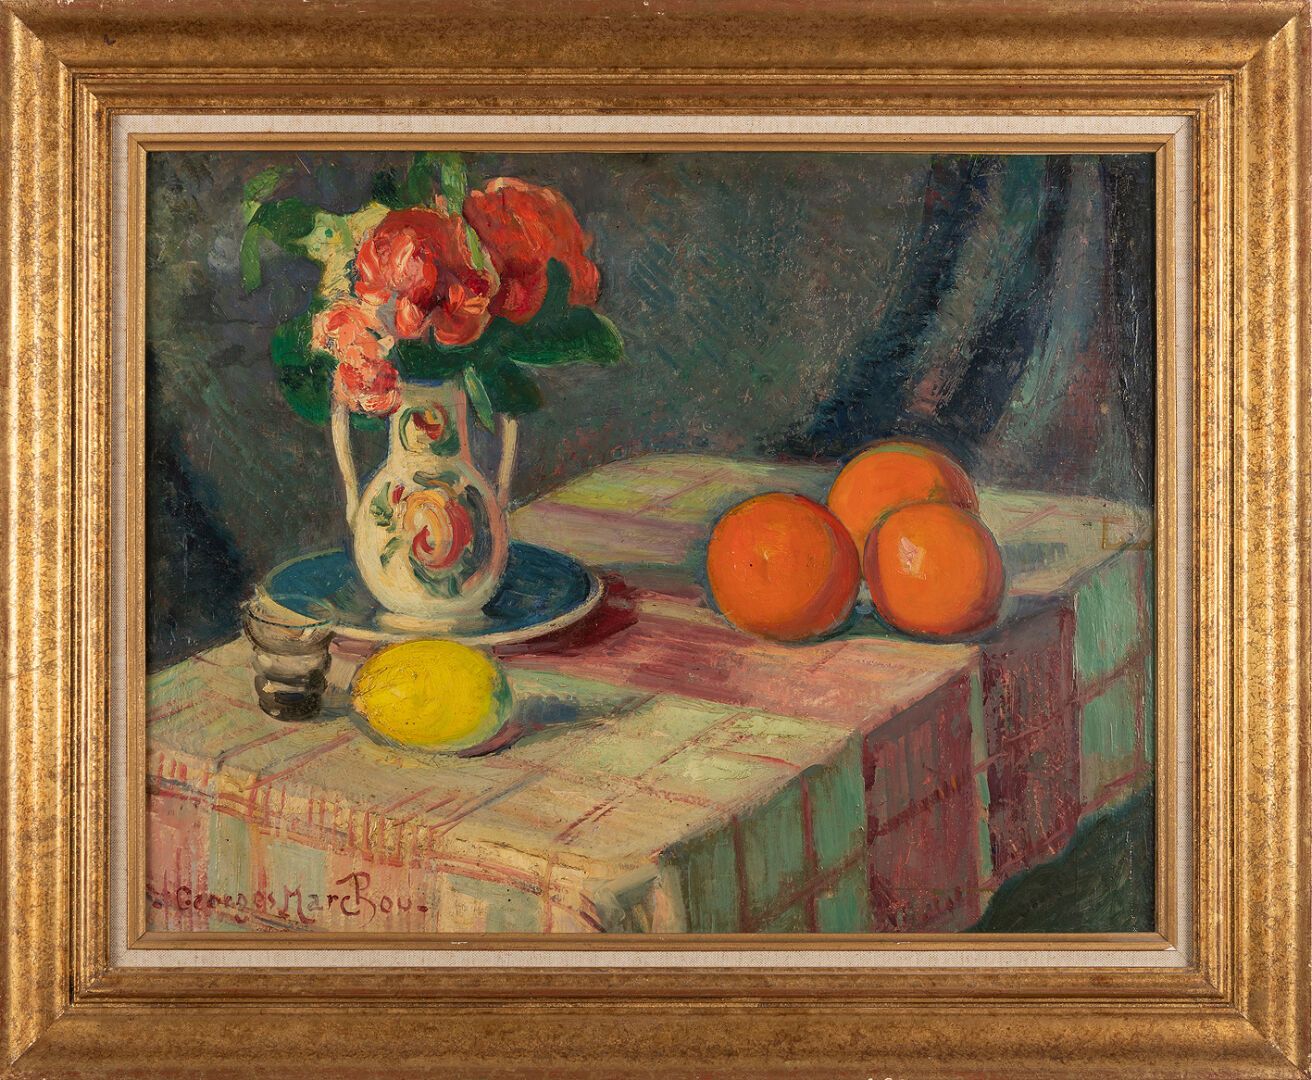 Null Georges MARCHOU (1898-1984)

鲜花和水果的静物画

布面油画，左下角有签名

49 x 63 cm